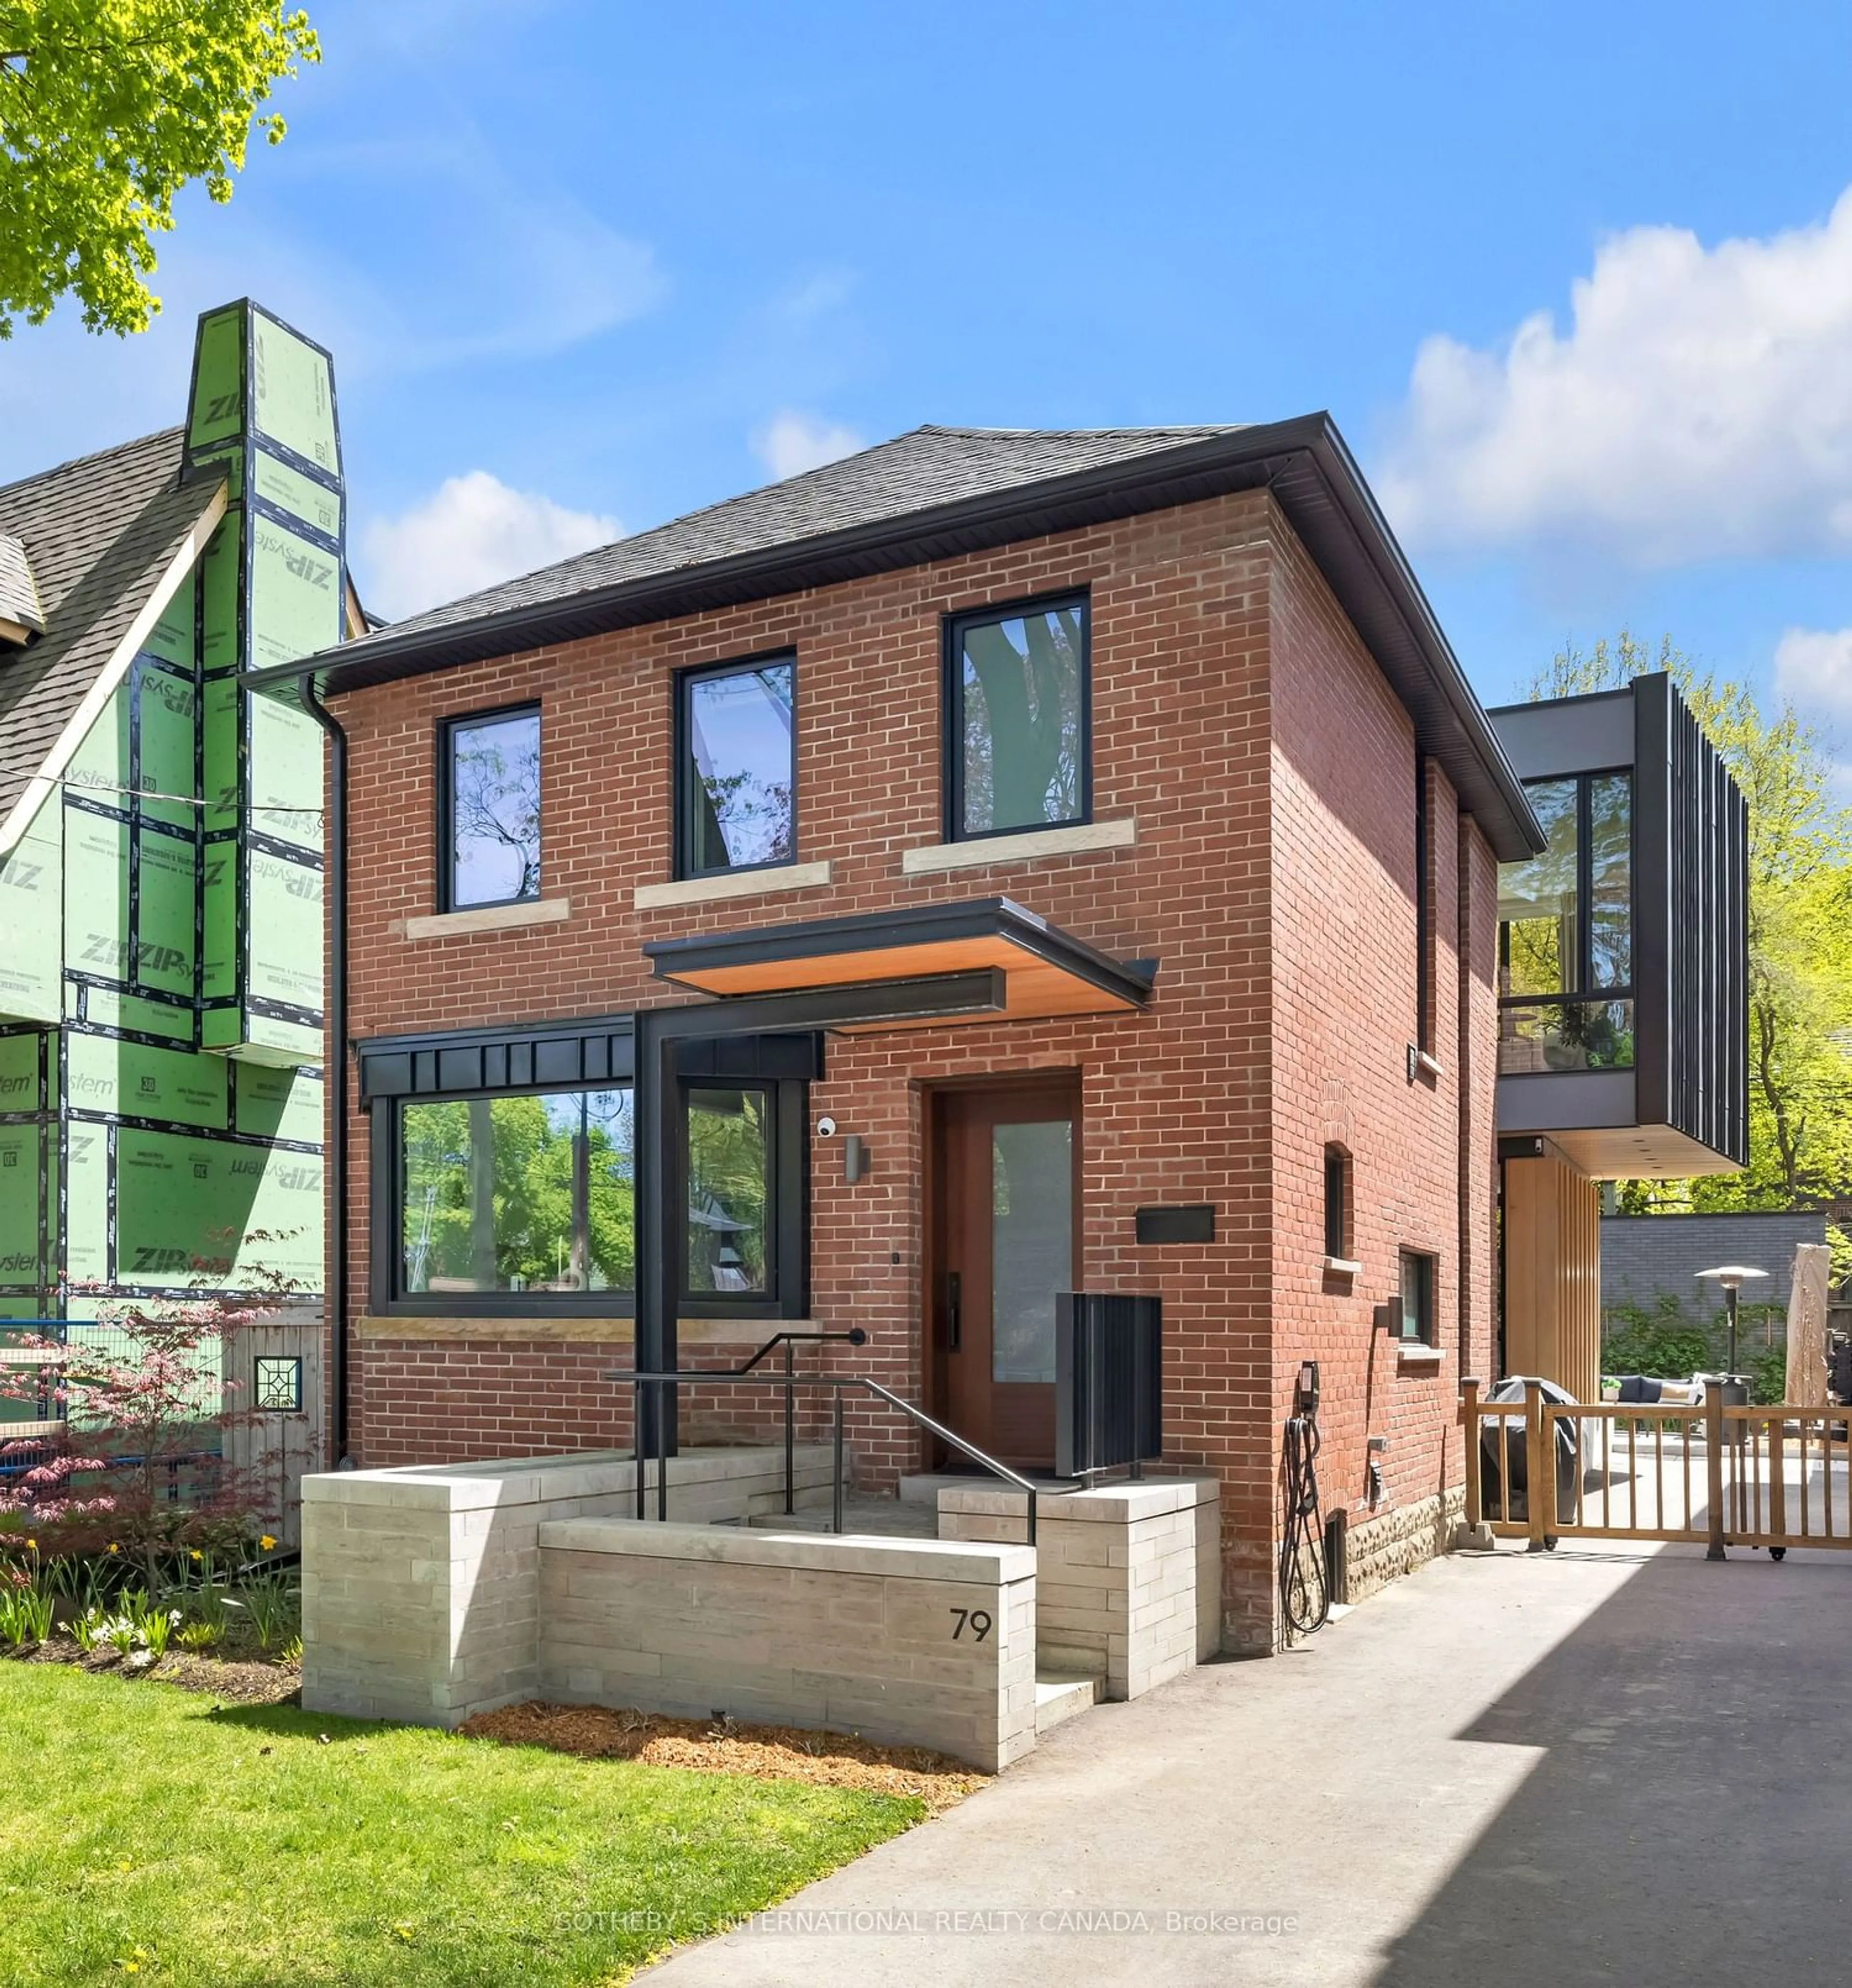 Home with brick exterior material for 79 Mcrae Dr, Toronto Ontario M4G 1S3